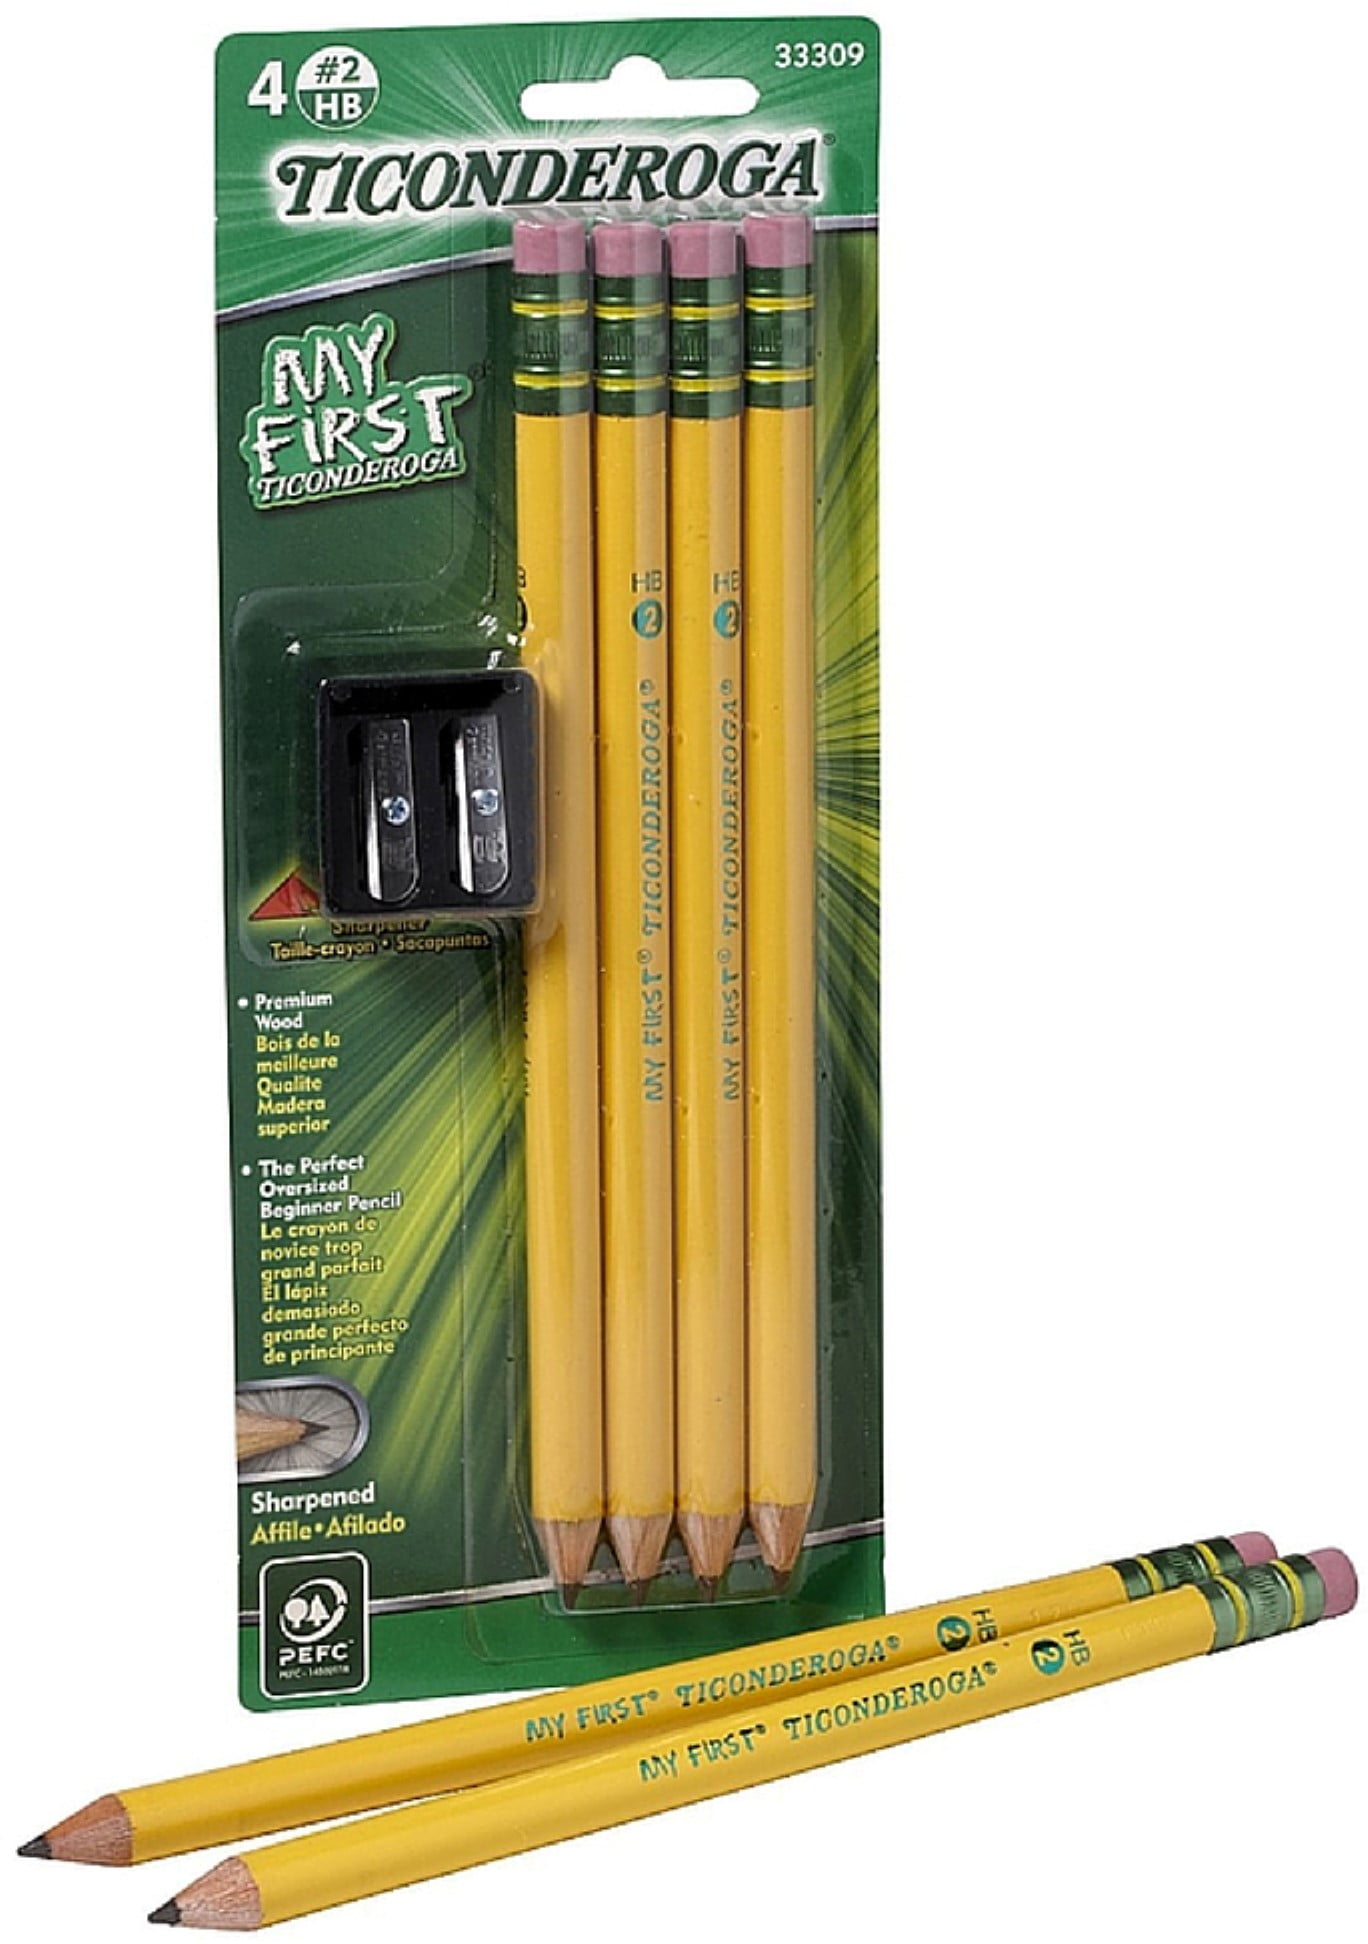 50 Sharpened pencils Pack Pencils Sharpened with eraser top Pack 2HB pencil Set 